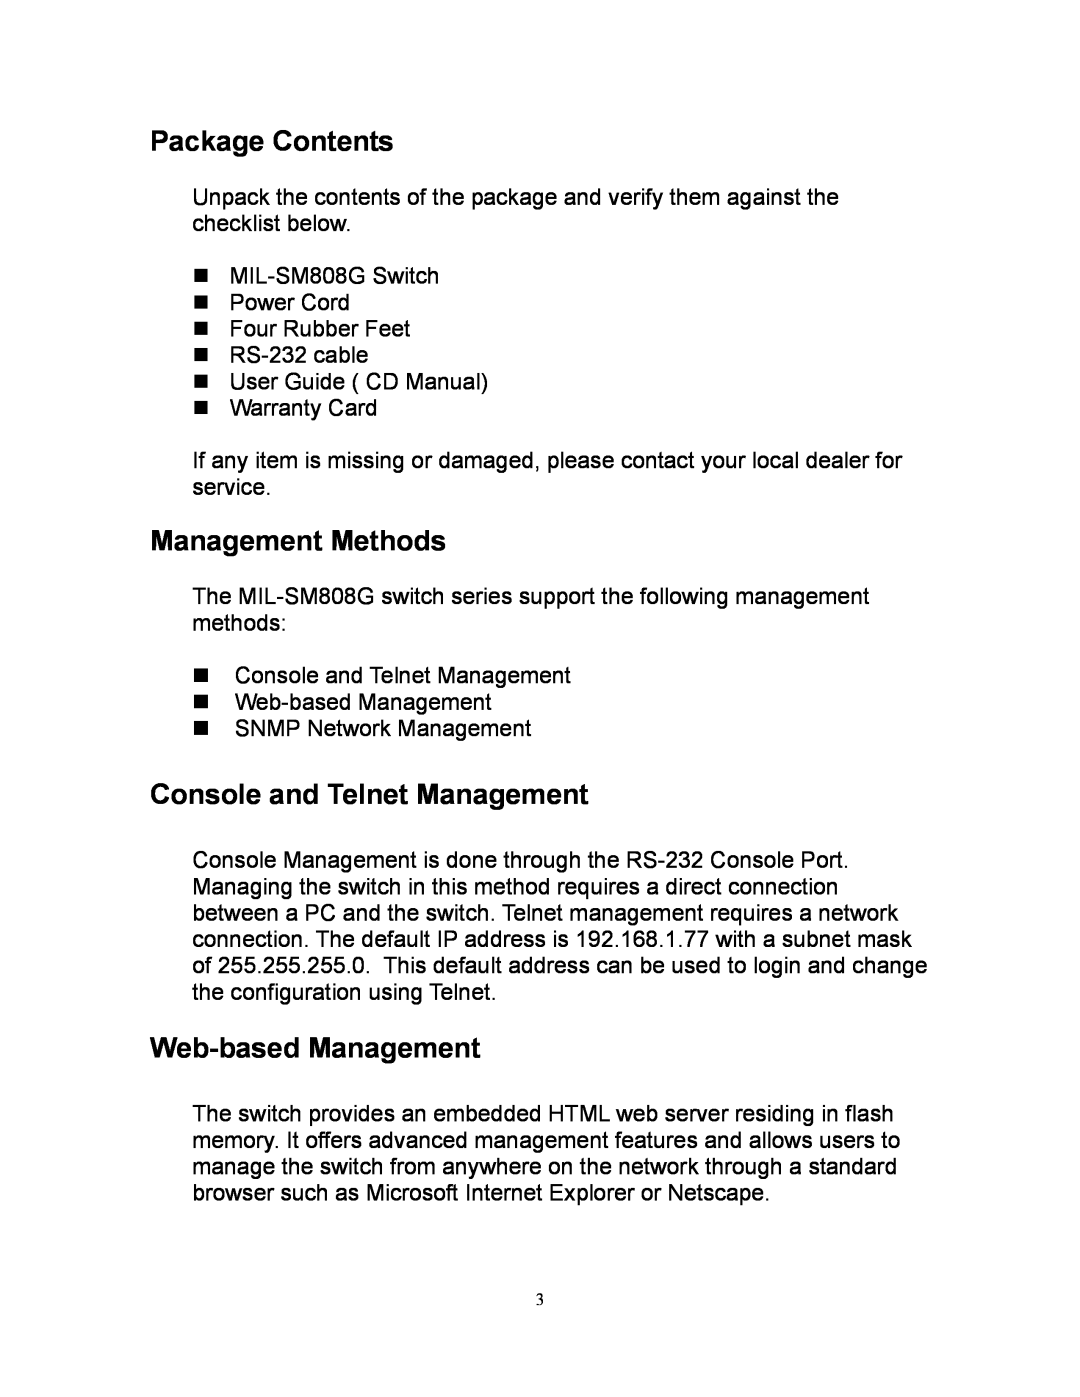 Milan Technology MIL-SM808G Package Contents, Management Methods, Console and Telnet Management, Web-based Management 